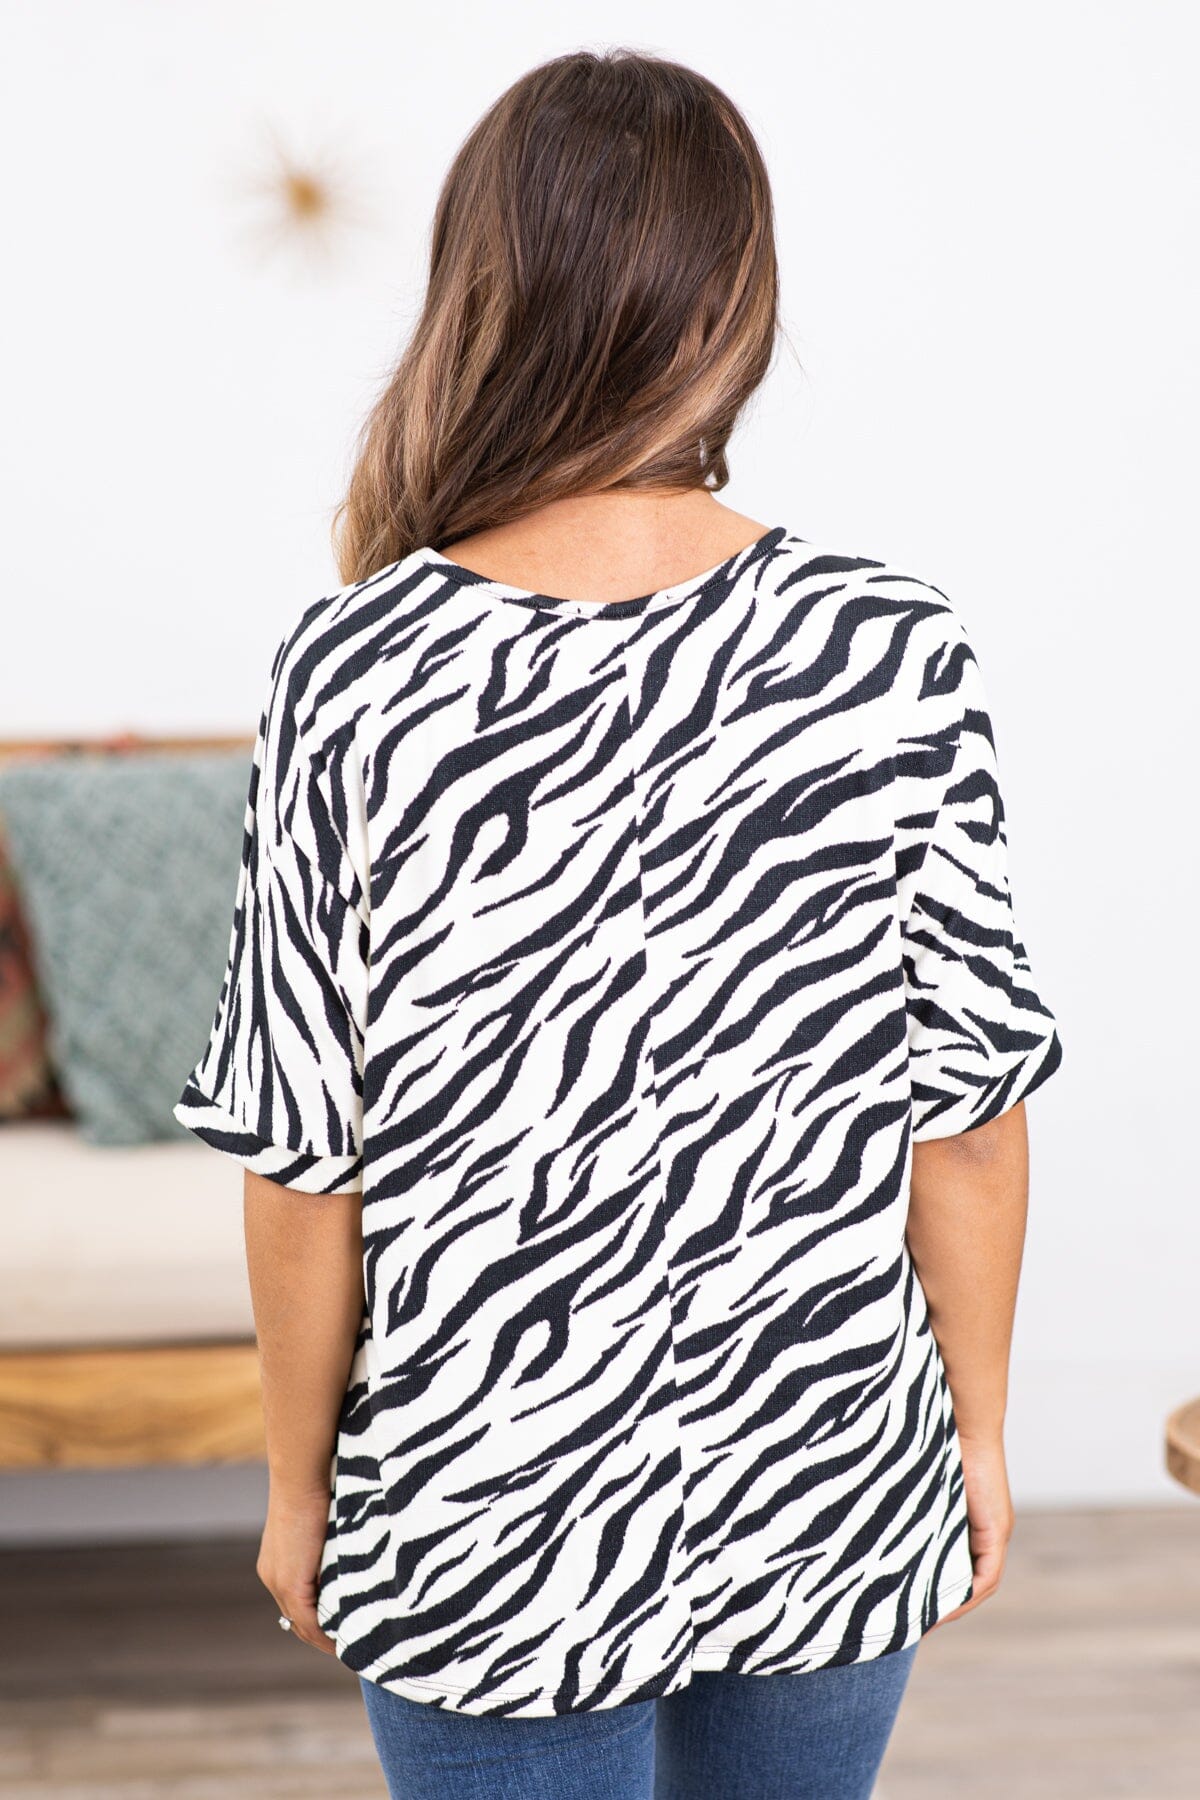 Black and Ivory Zebra Print V-Neck Top - Filly Flair